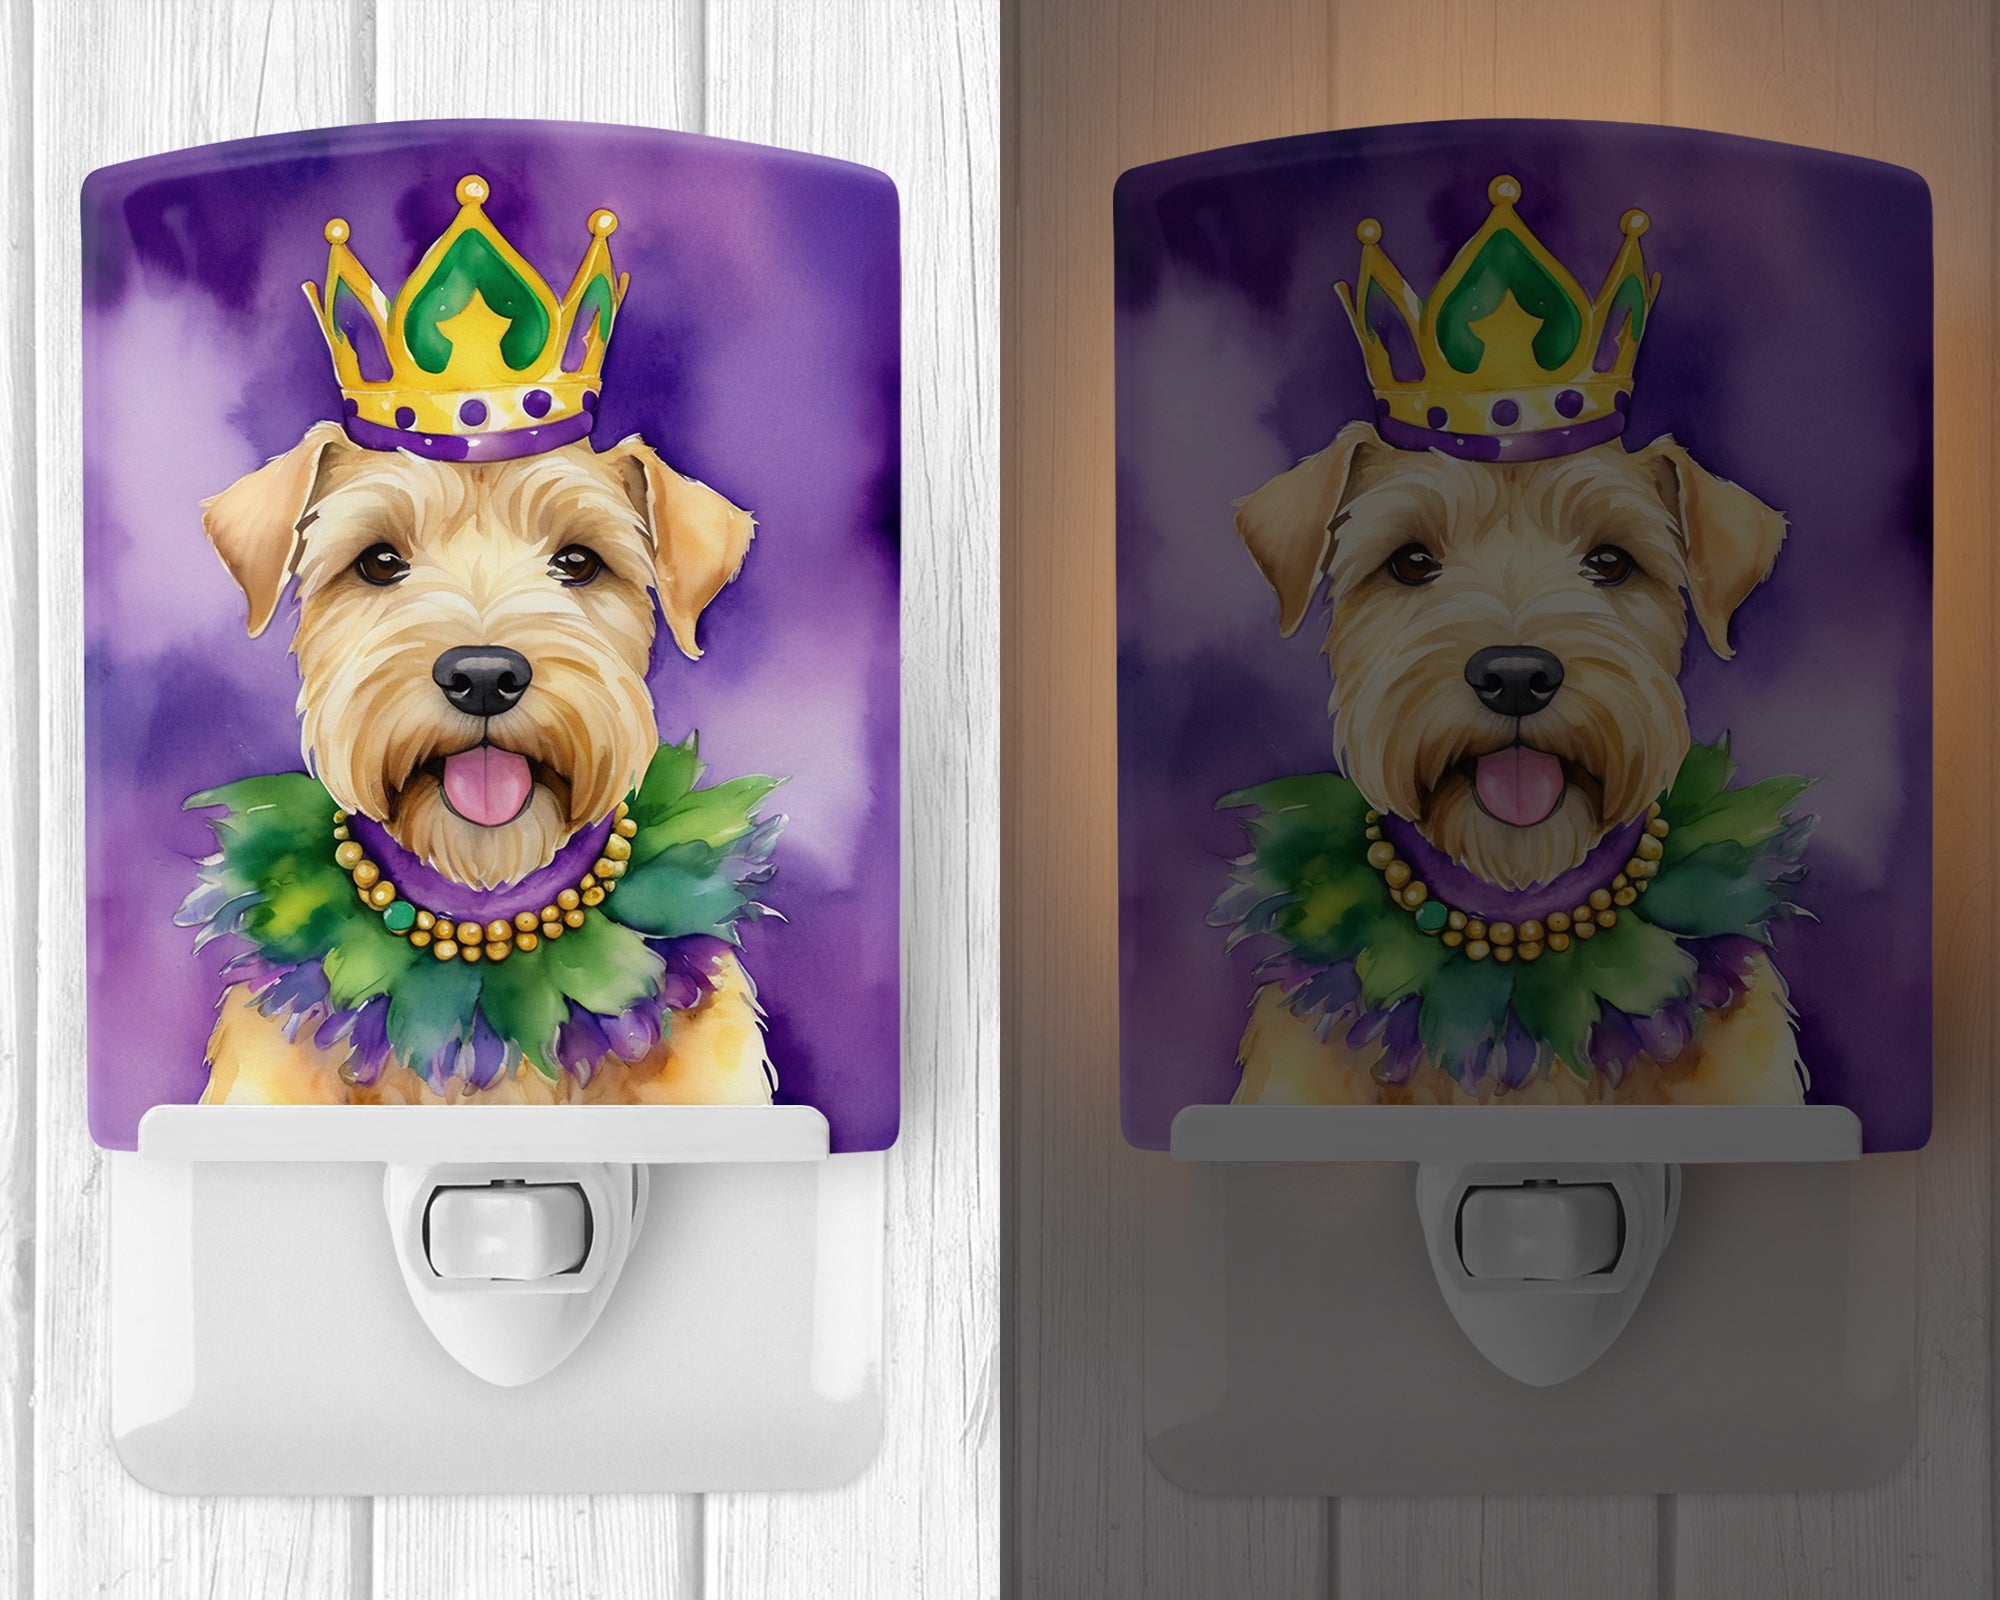 Buy this Wheaten Terrier King of Mardi Gras Ceramic Night Light